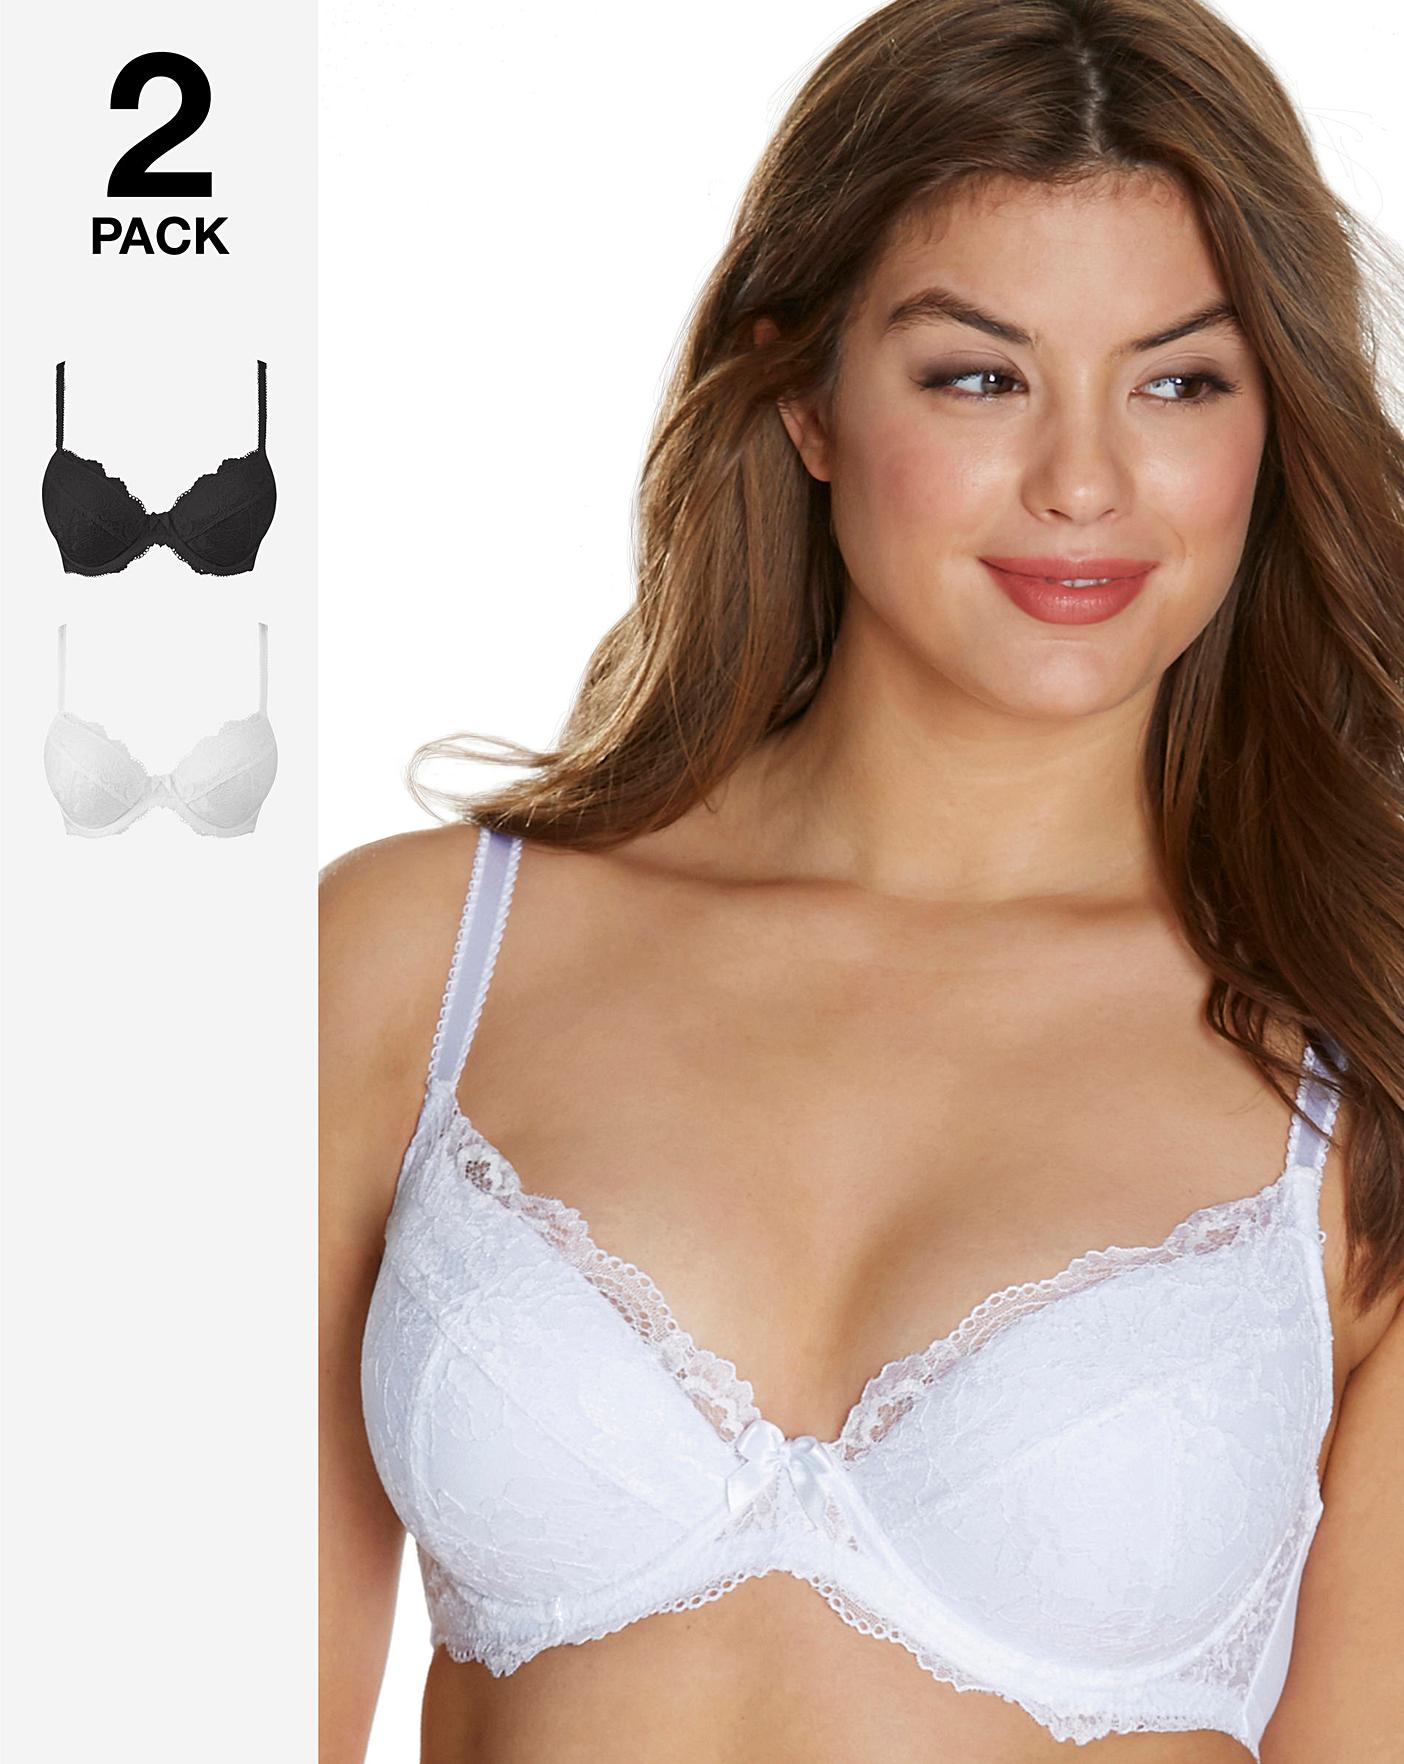 34G white bra - 40 products